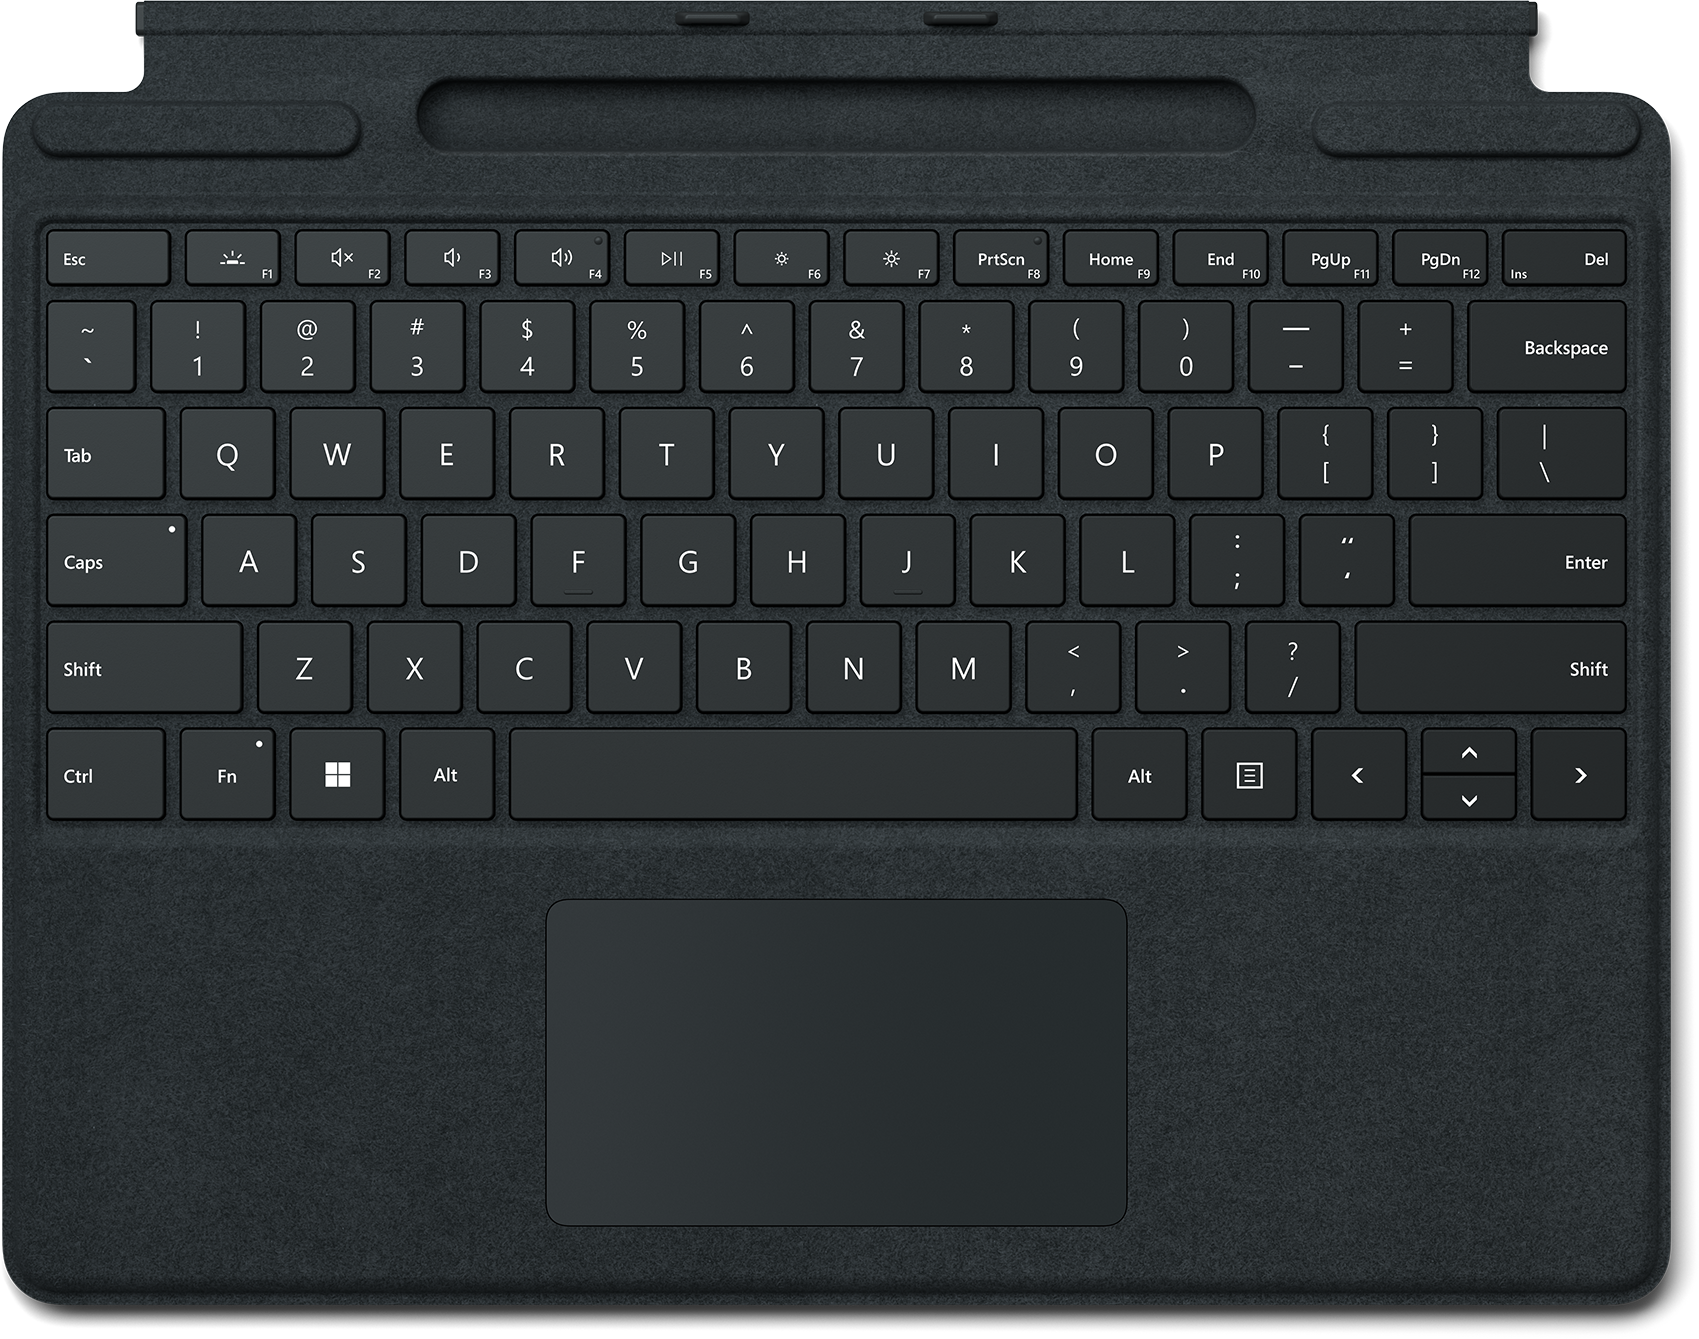 Surface Pro Signature Keyboard - Black